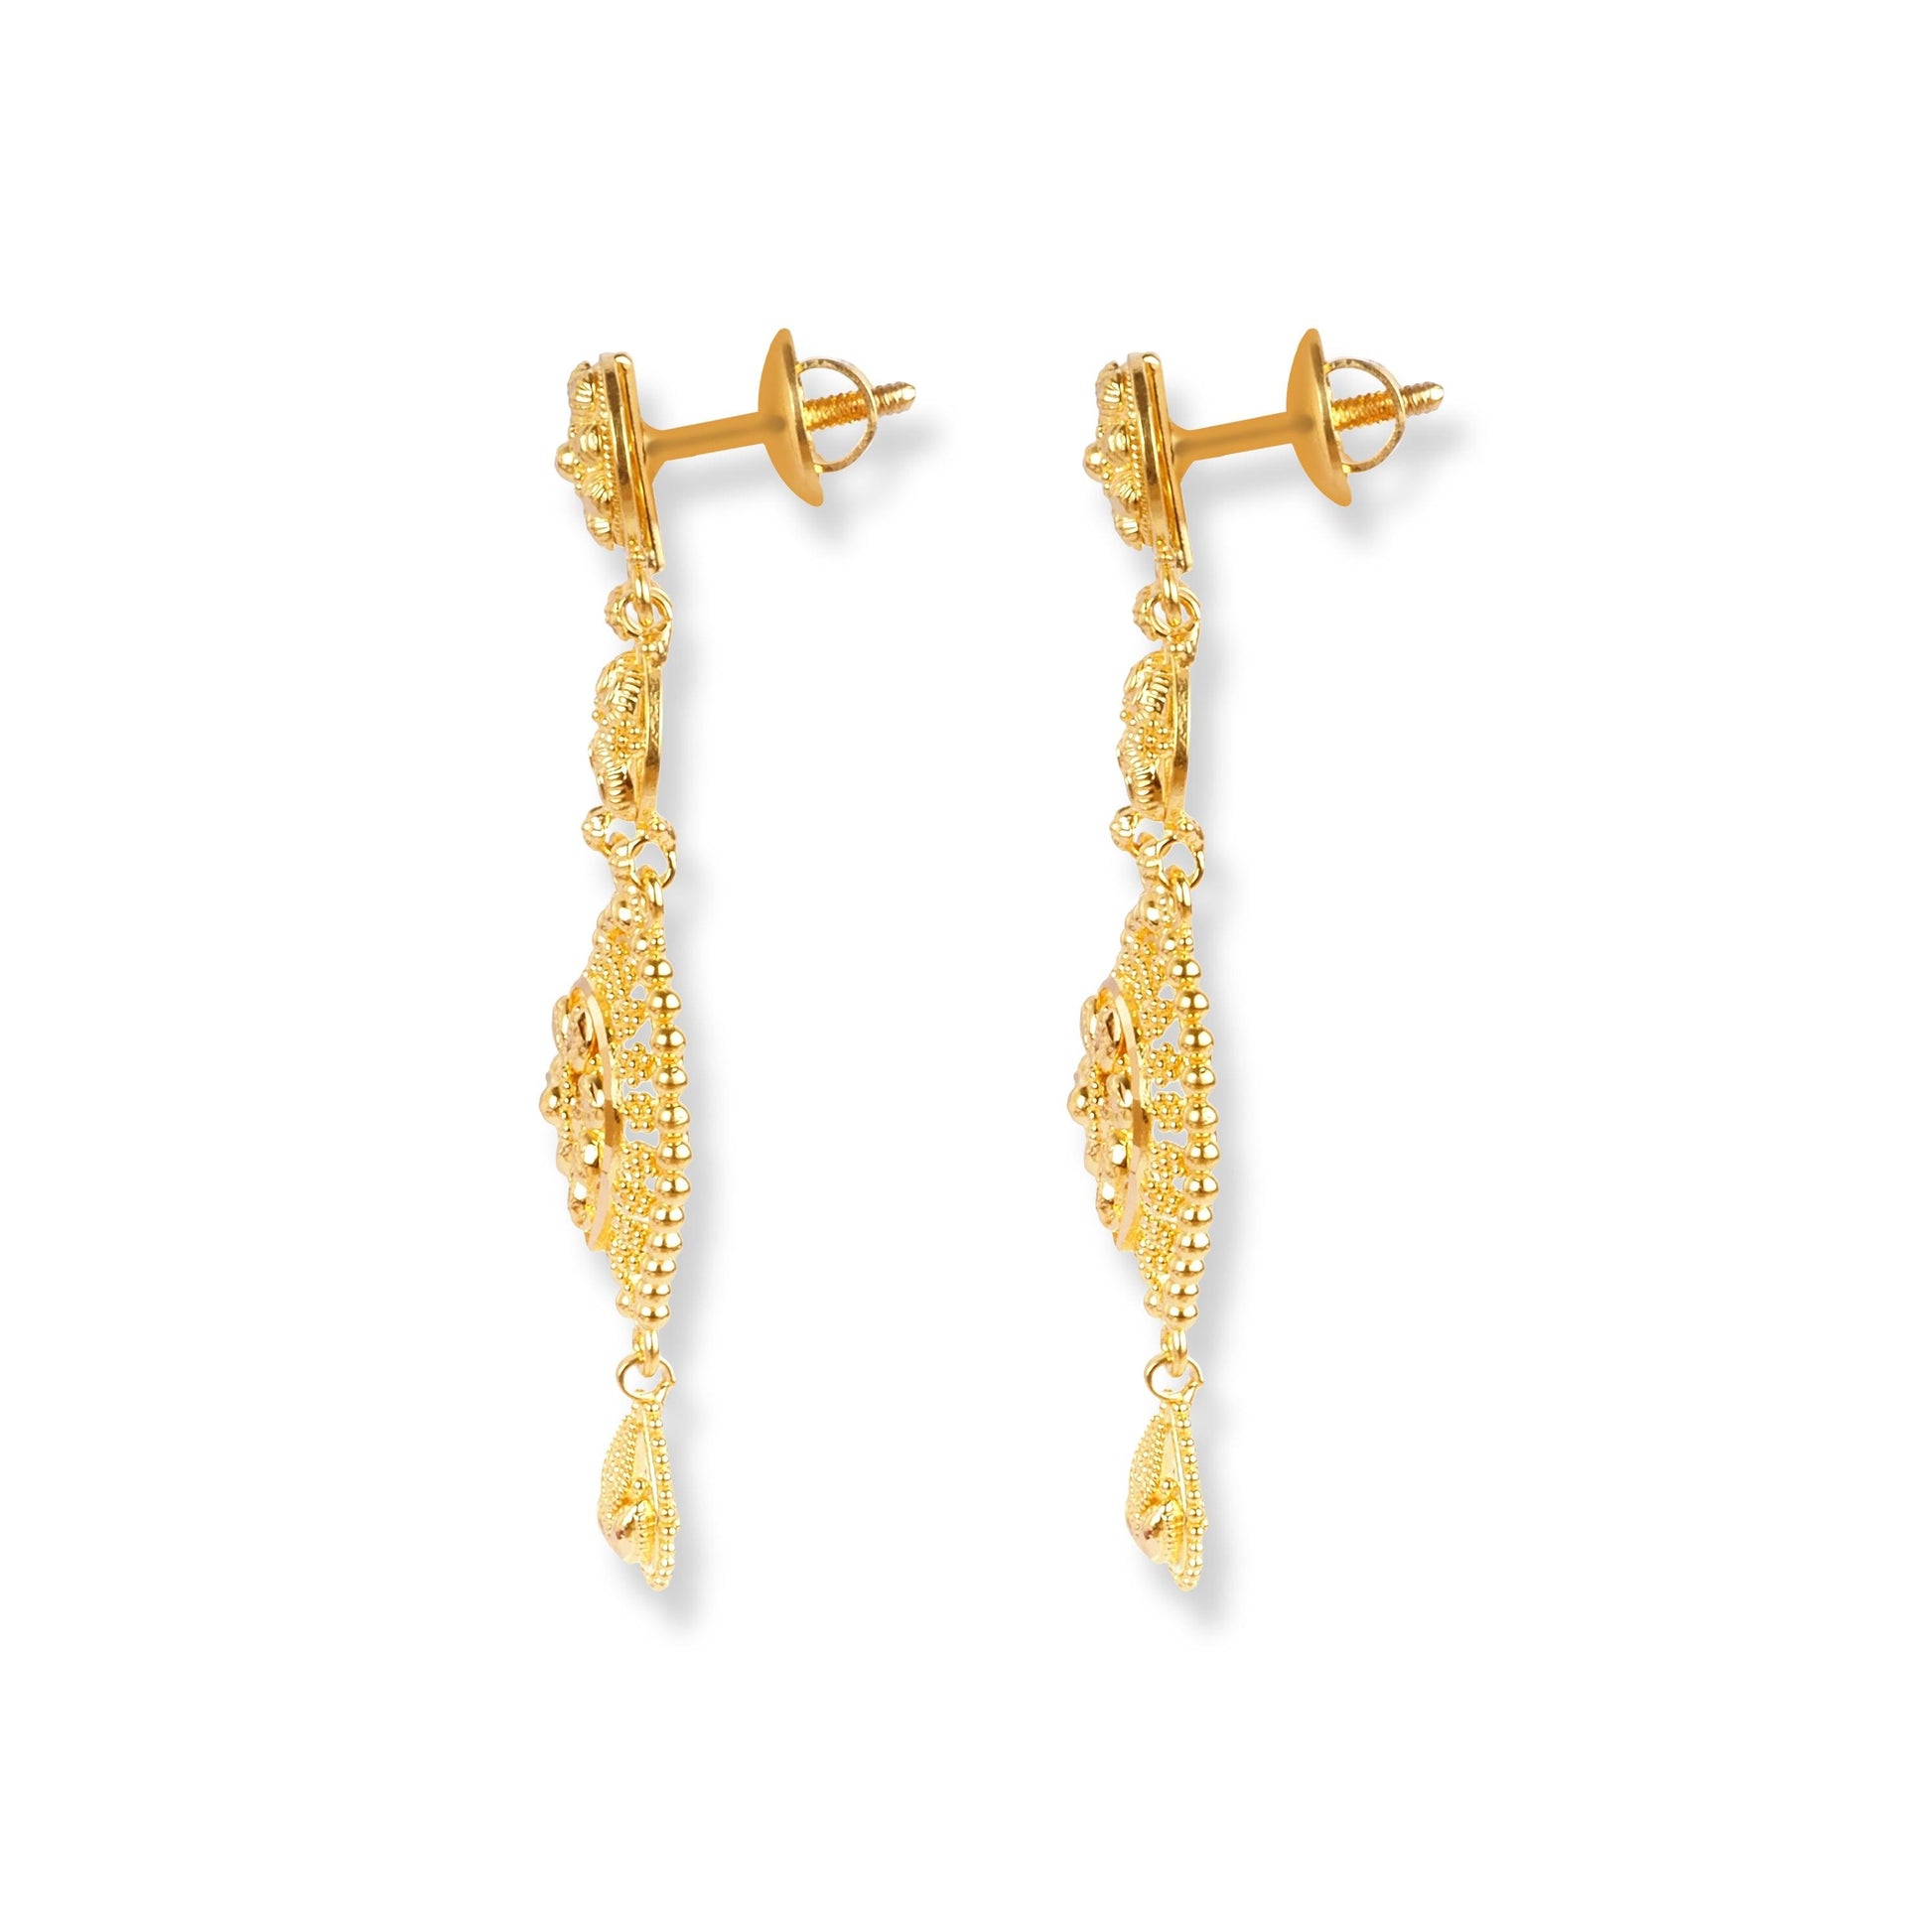 22ct Gold Set with Graduated Filigree Design and '' U '' Hook Clasp N-7924 - Minar Jewellers